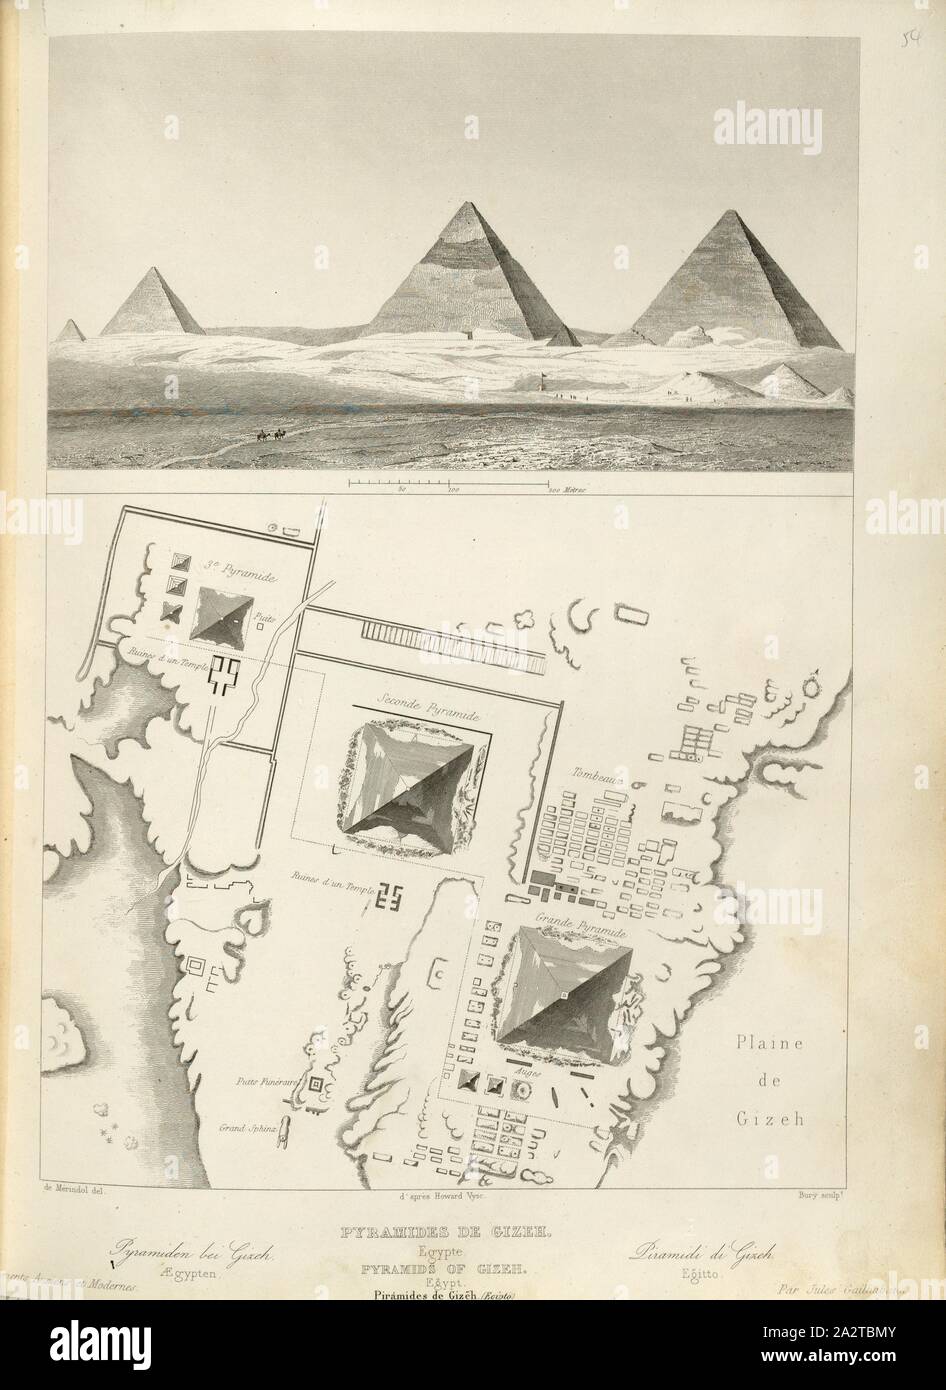 Pyramids of Giza, Pyramids of Giza, signed: de Mérindol (del.), D'après Howard Vyac, Bury (sculp.), Fig. 40, p. 179, Vyac, Howard (d'après), Mérindol, de (del.), Bury (sculp.), 1853, Jules Gailhabaud: Monuments anciens et modernes. Bd. 1. Paris: Librairie de Firmin Didot frères, 1853 Stock Photo